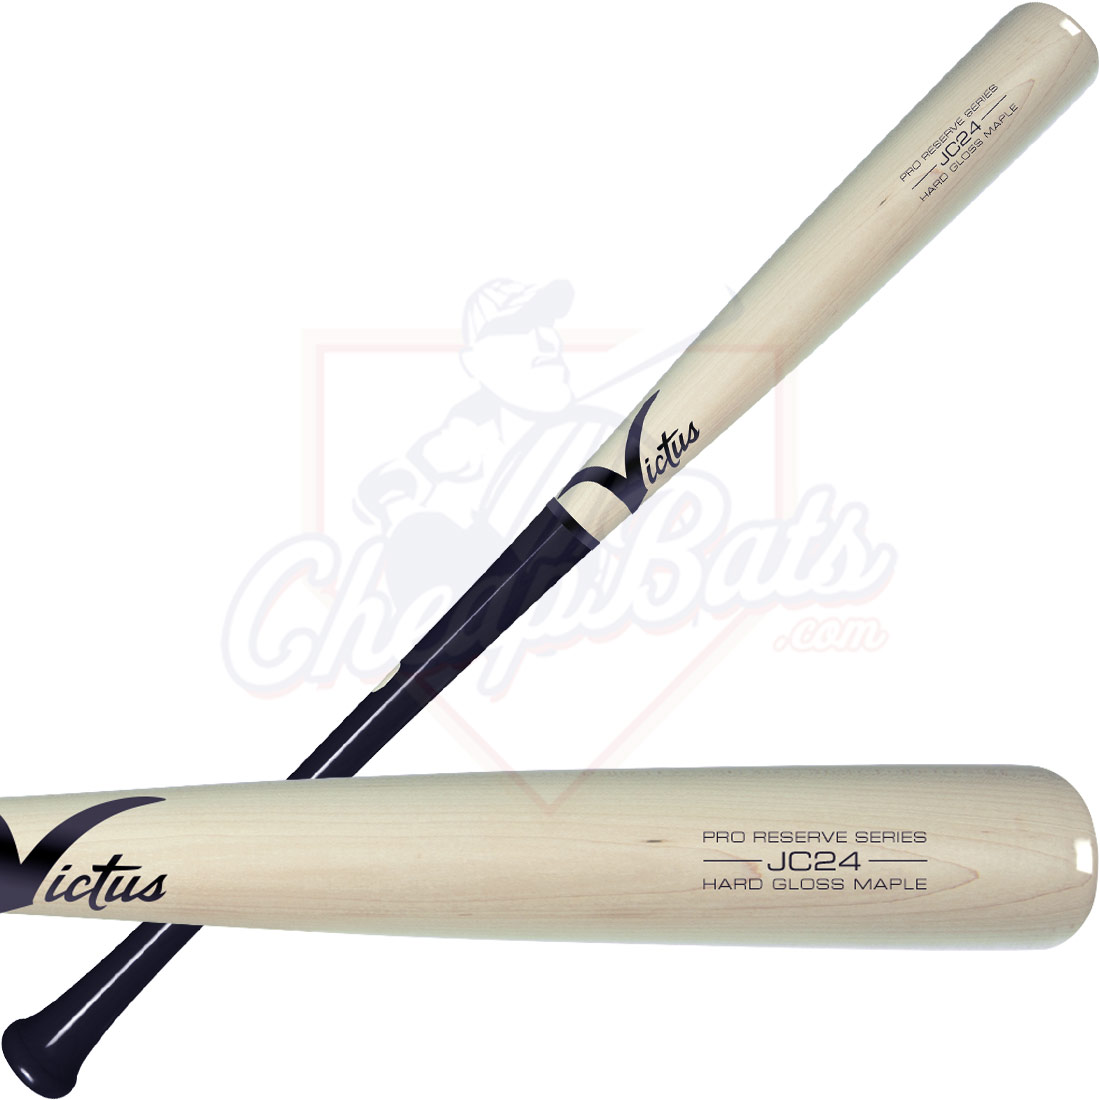 Victus JC24 Pro Reserve Maple Wood Baseball Bat VRWMJC24-BK/NT